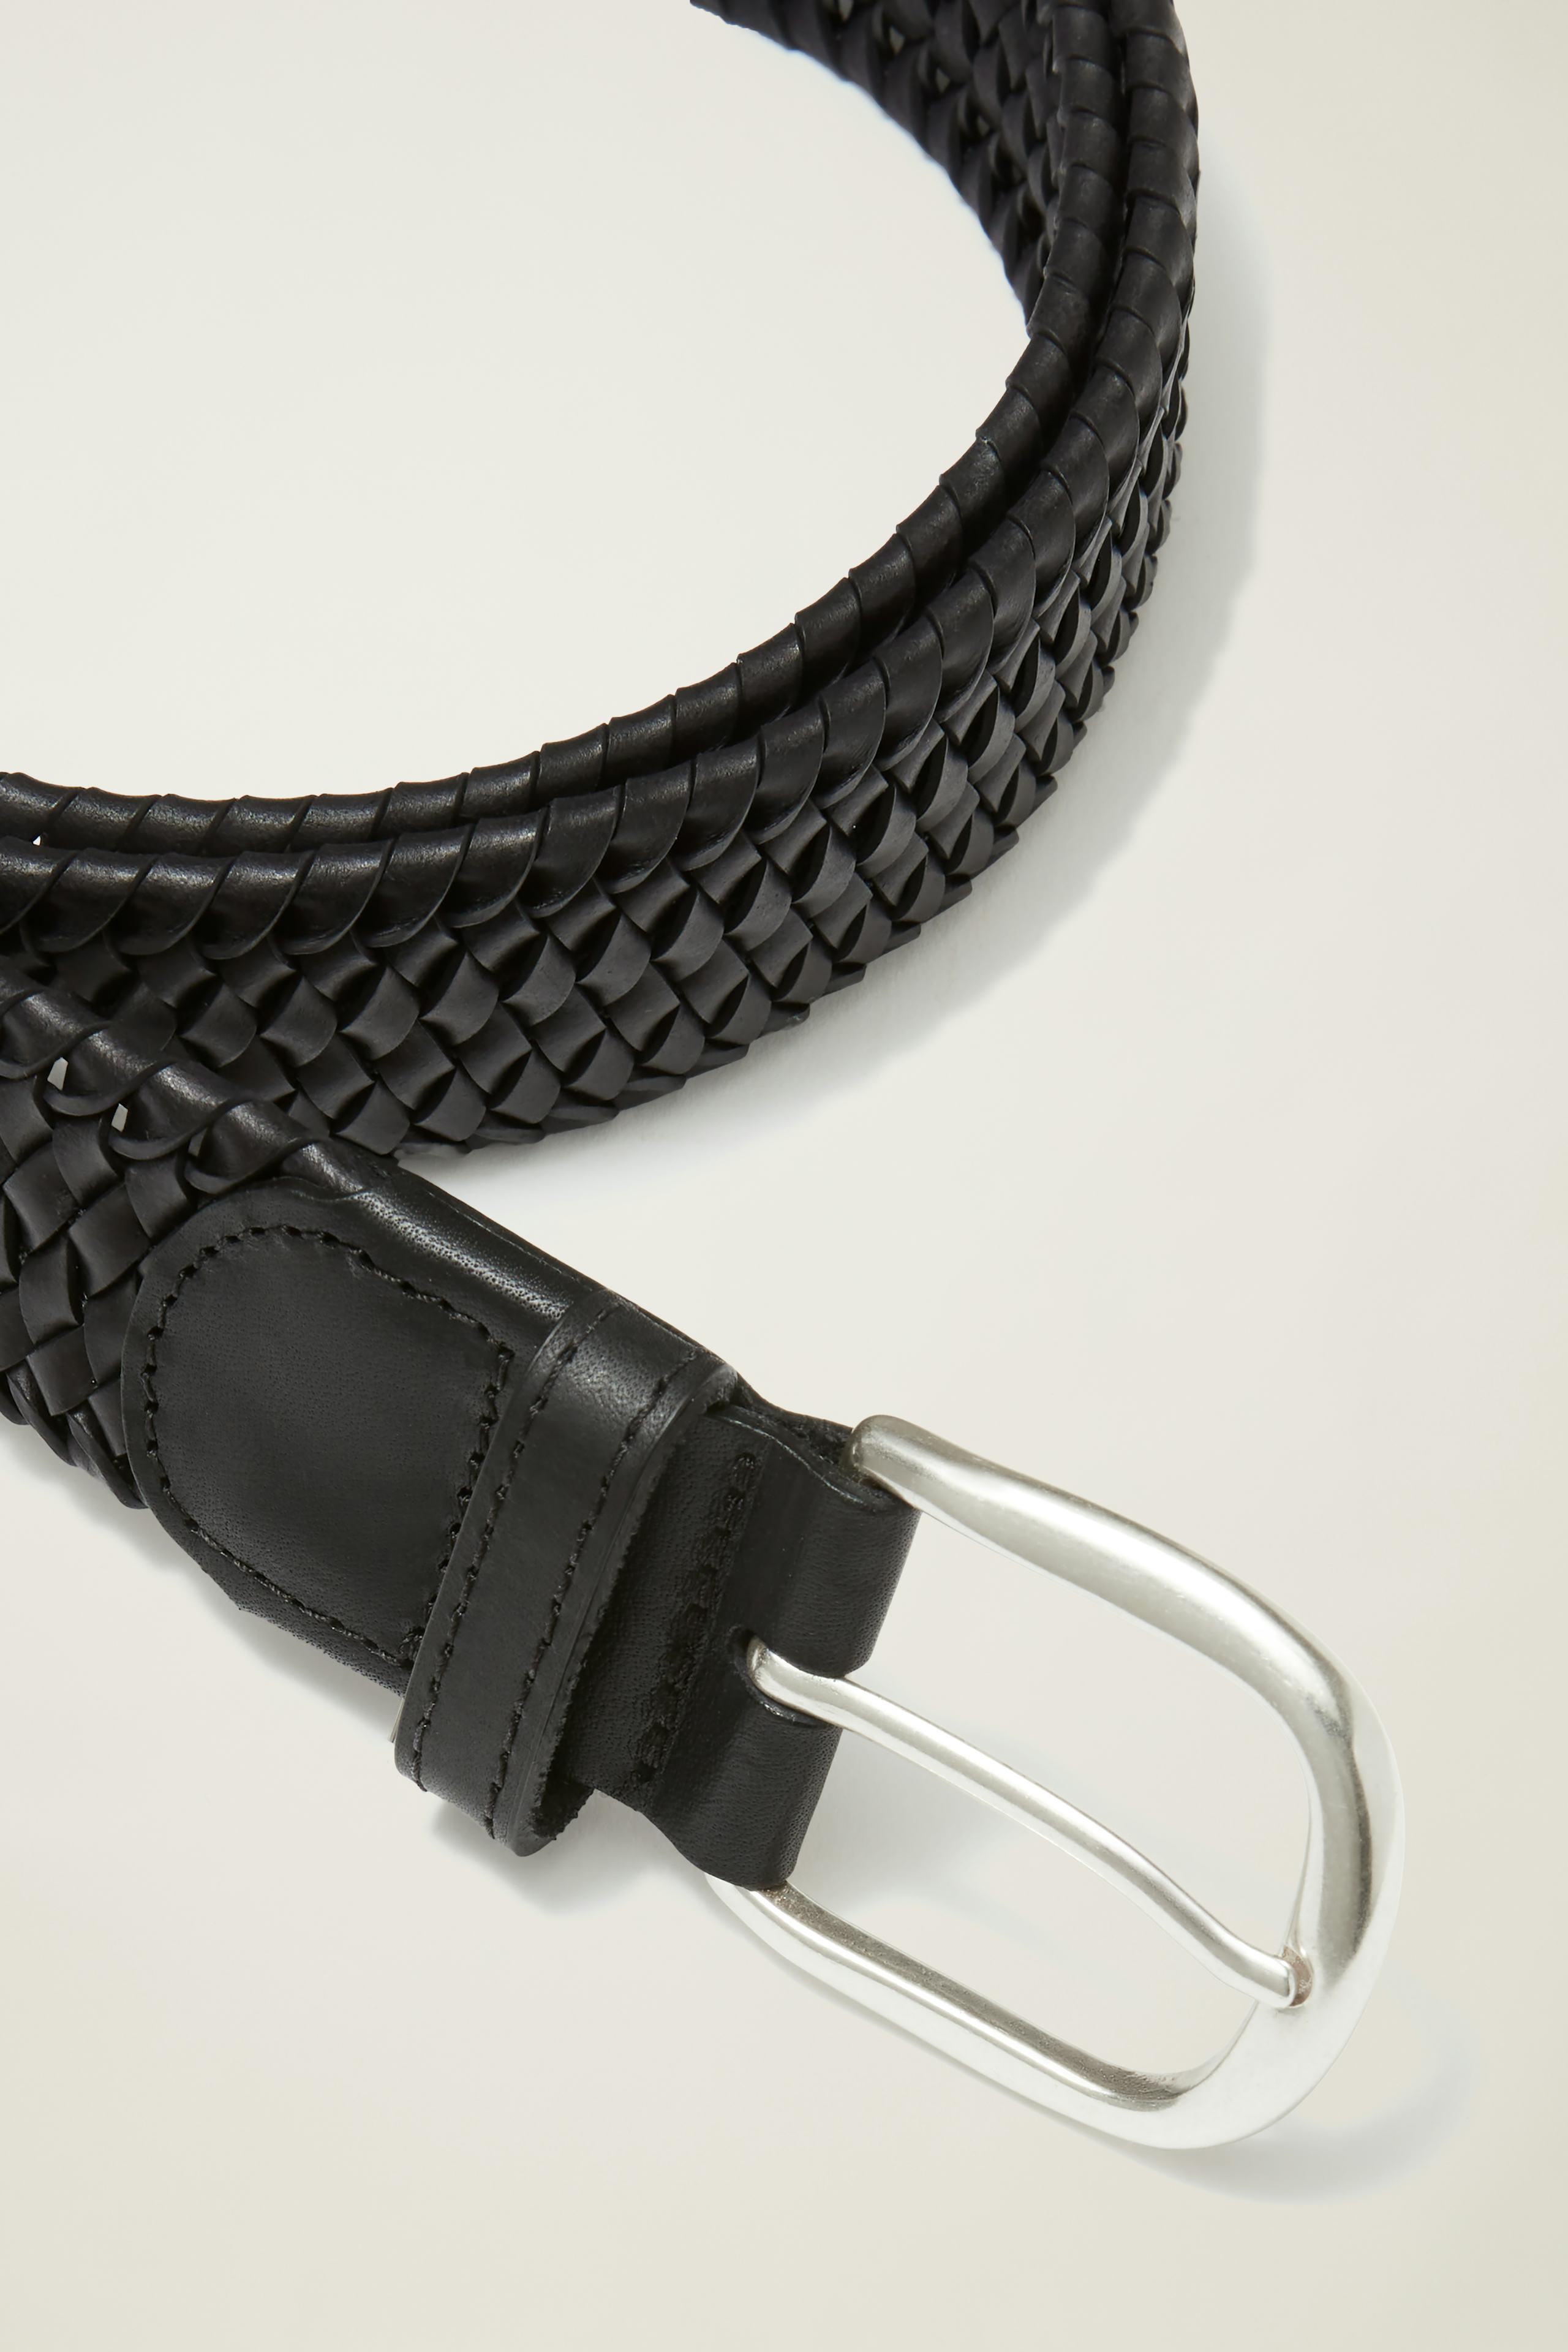 Leather Braided Belt